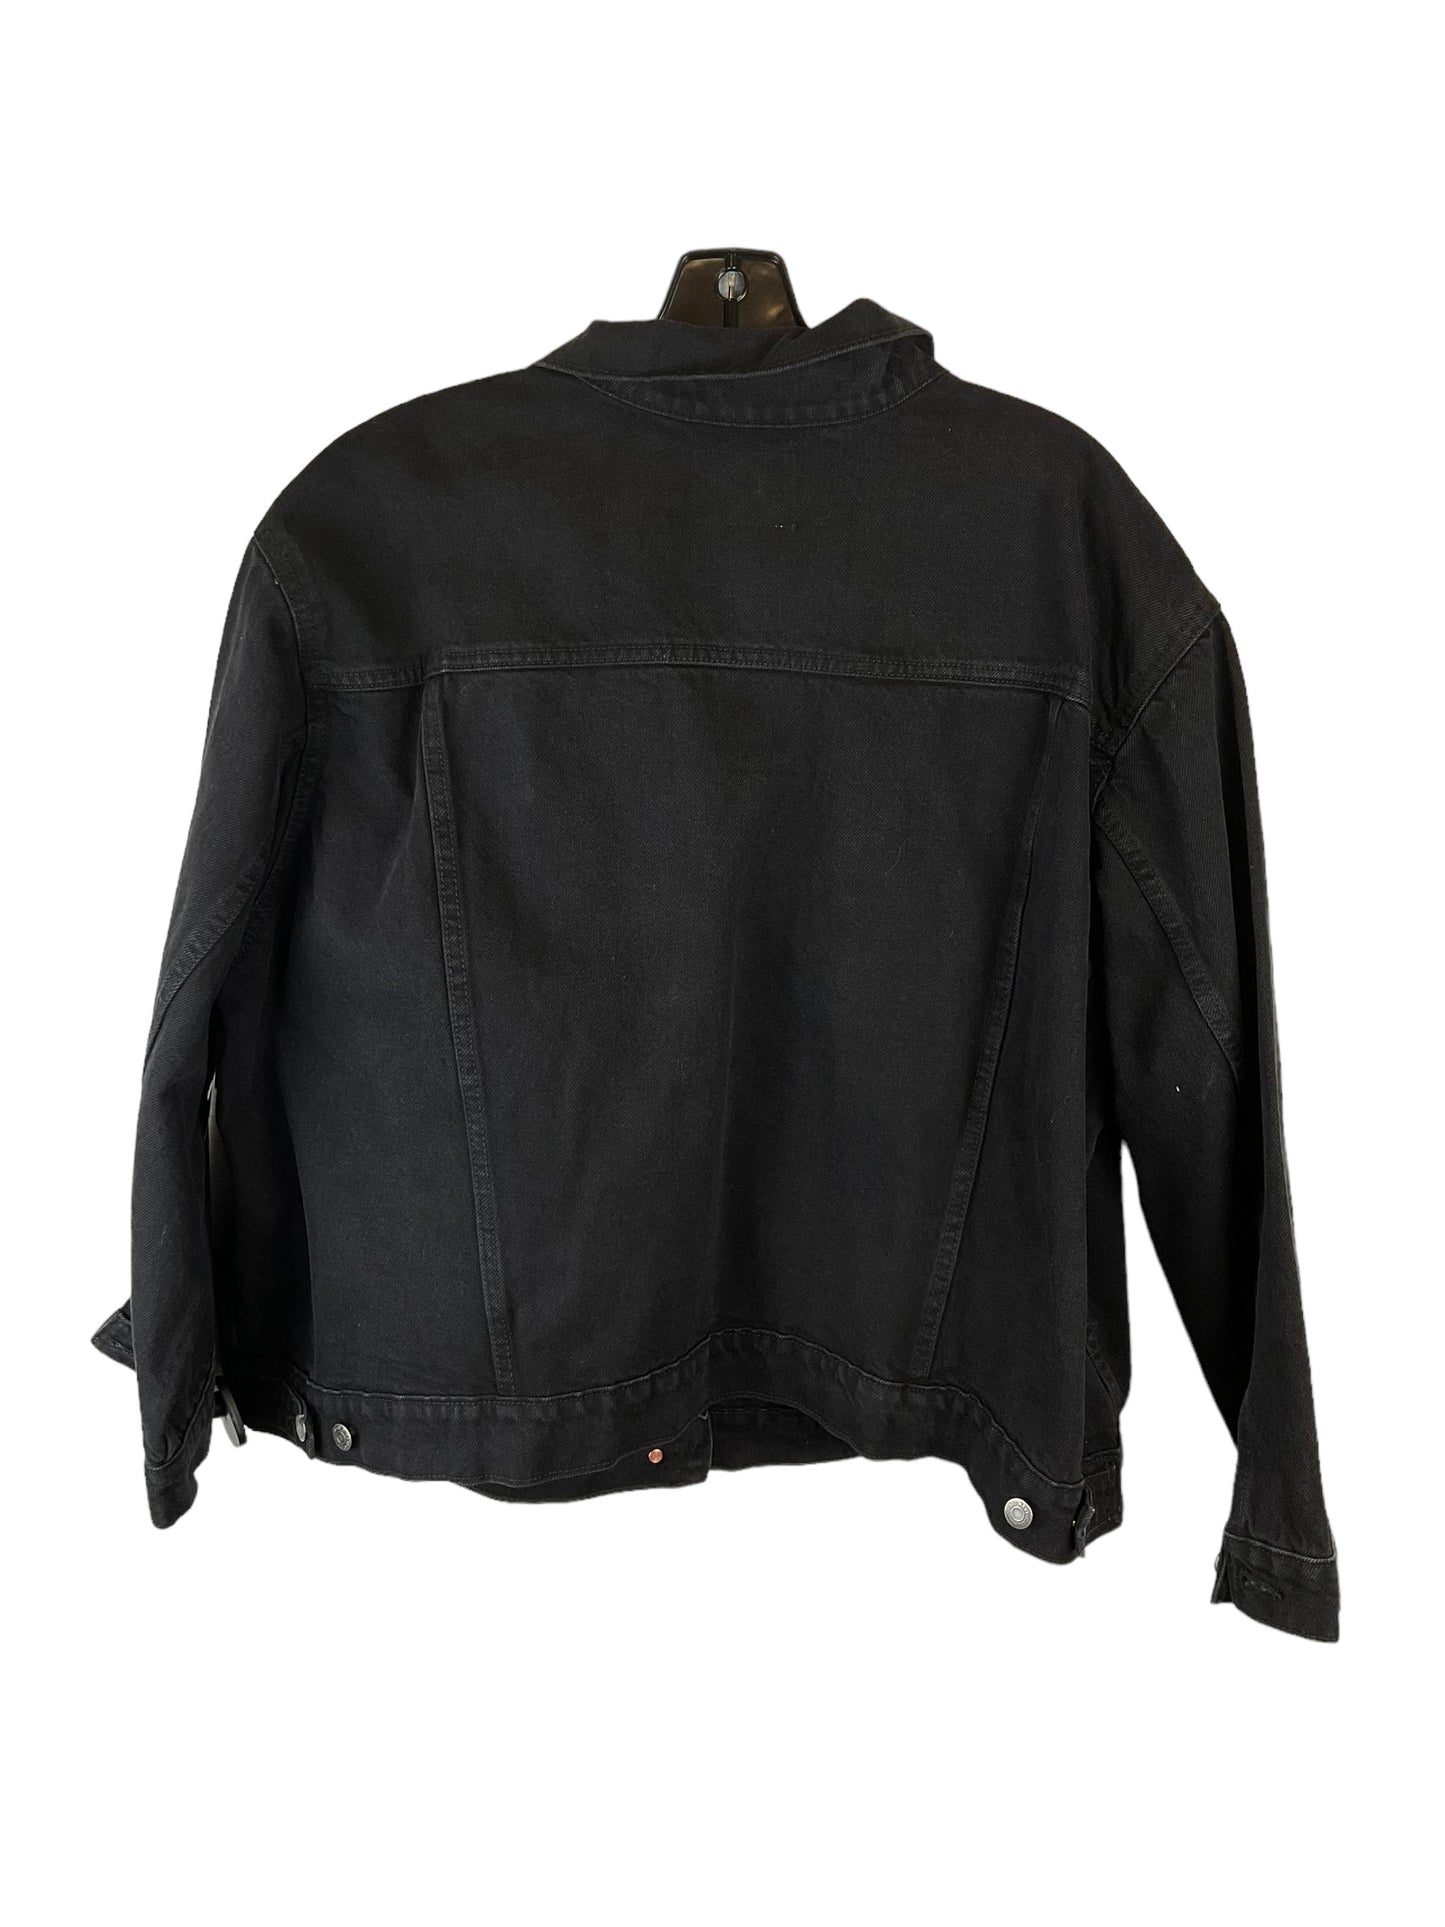 Jacket Denim By Old Navy  Size: 3x